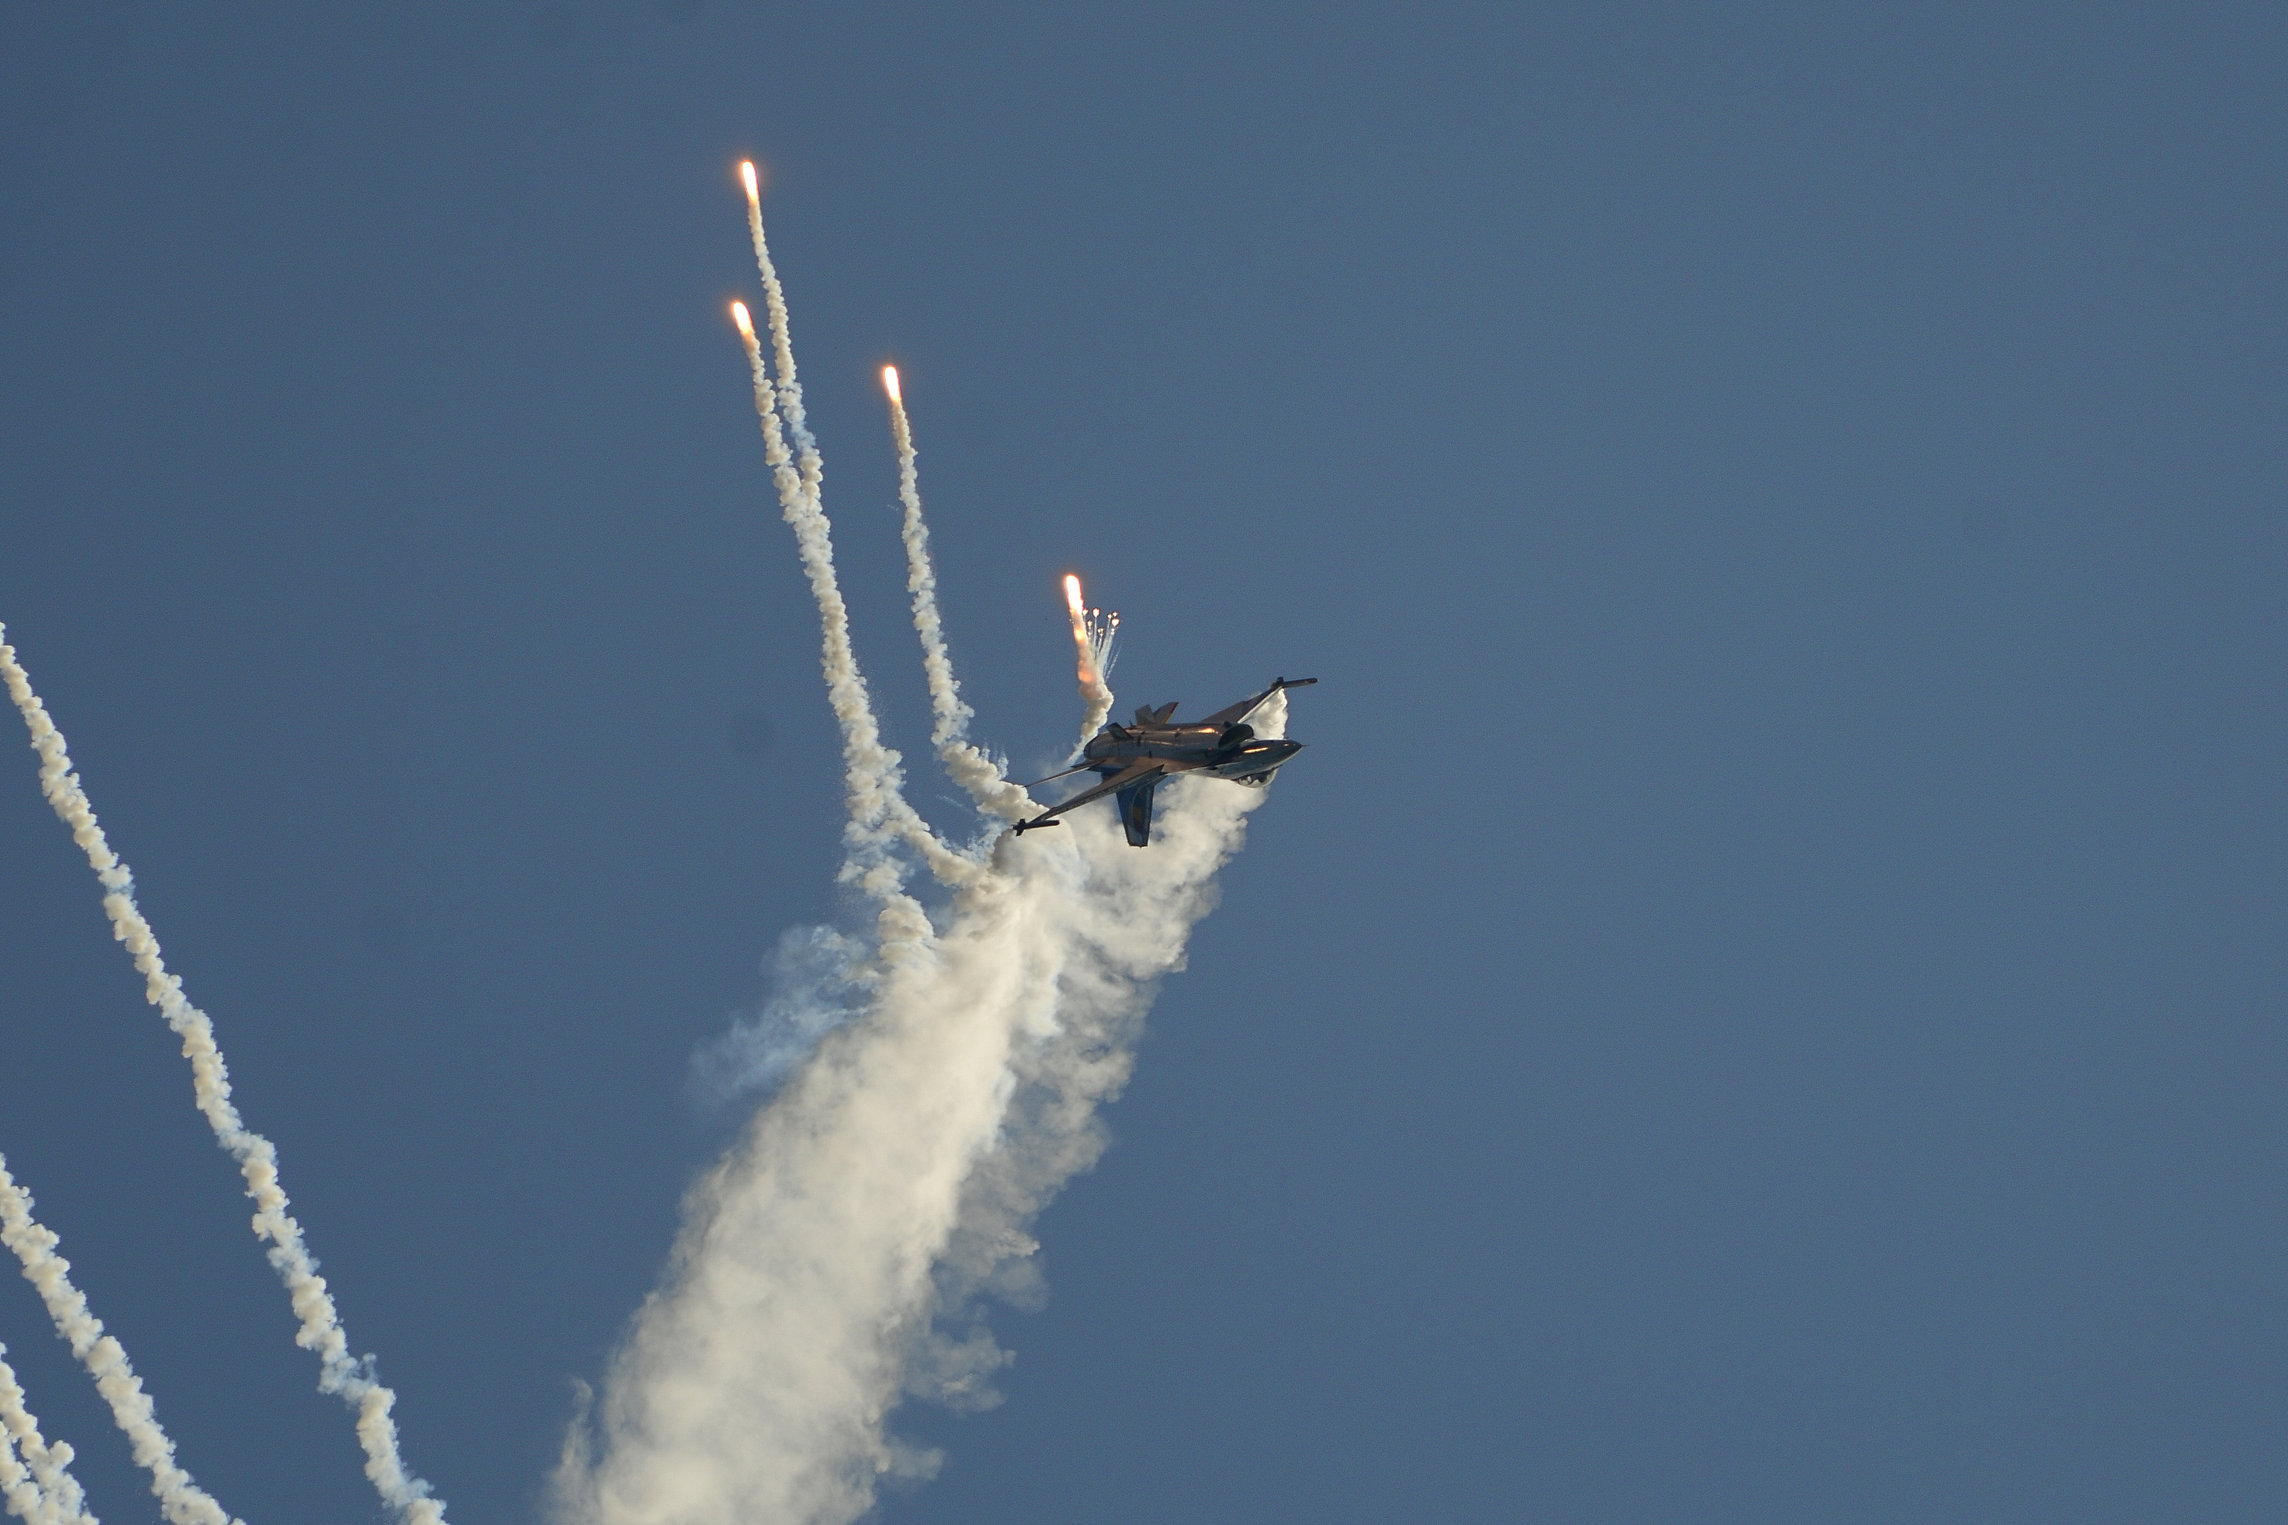 Evasive maneuvers - Jesolo Extreme air show 2013...